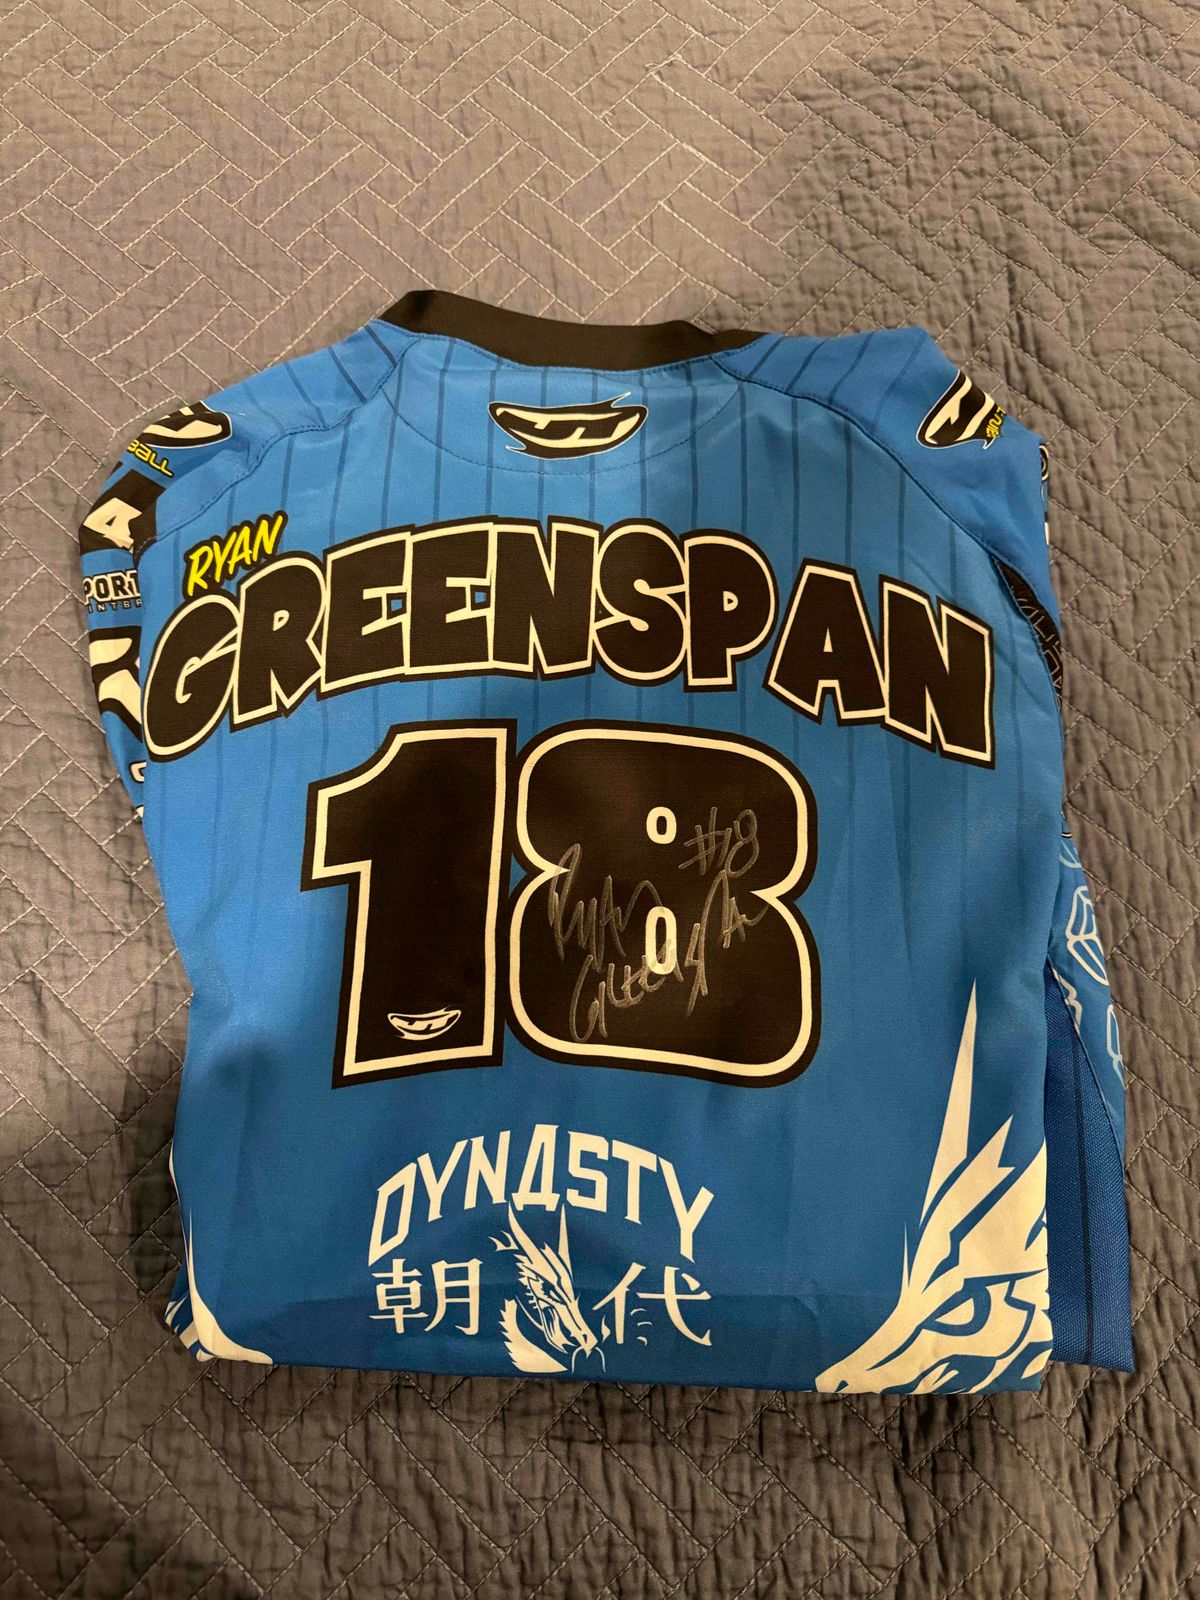 Ryan greenspan signed jersey